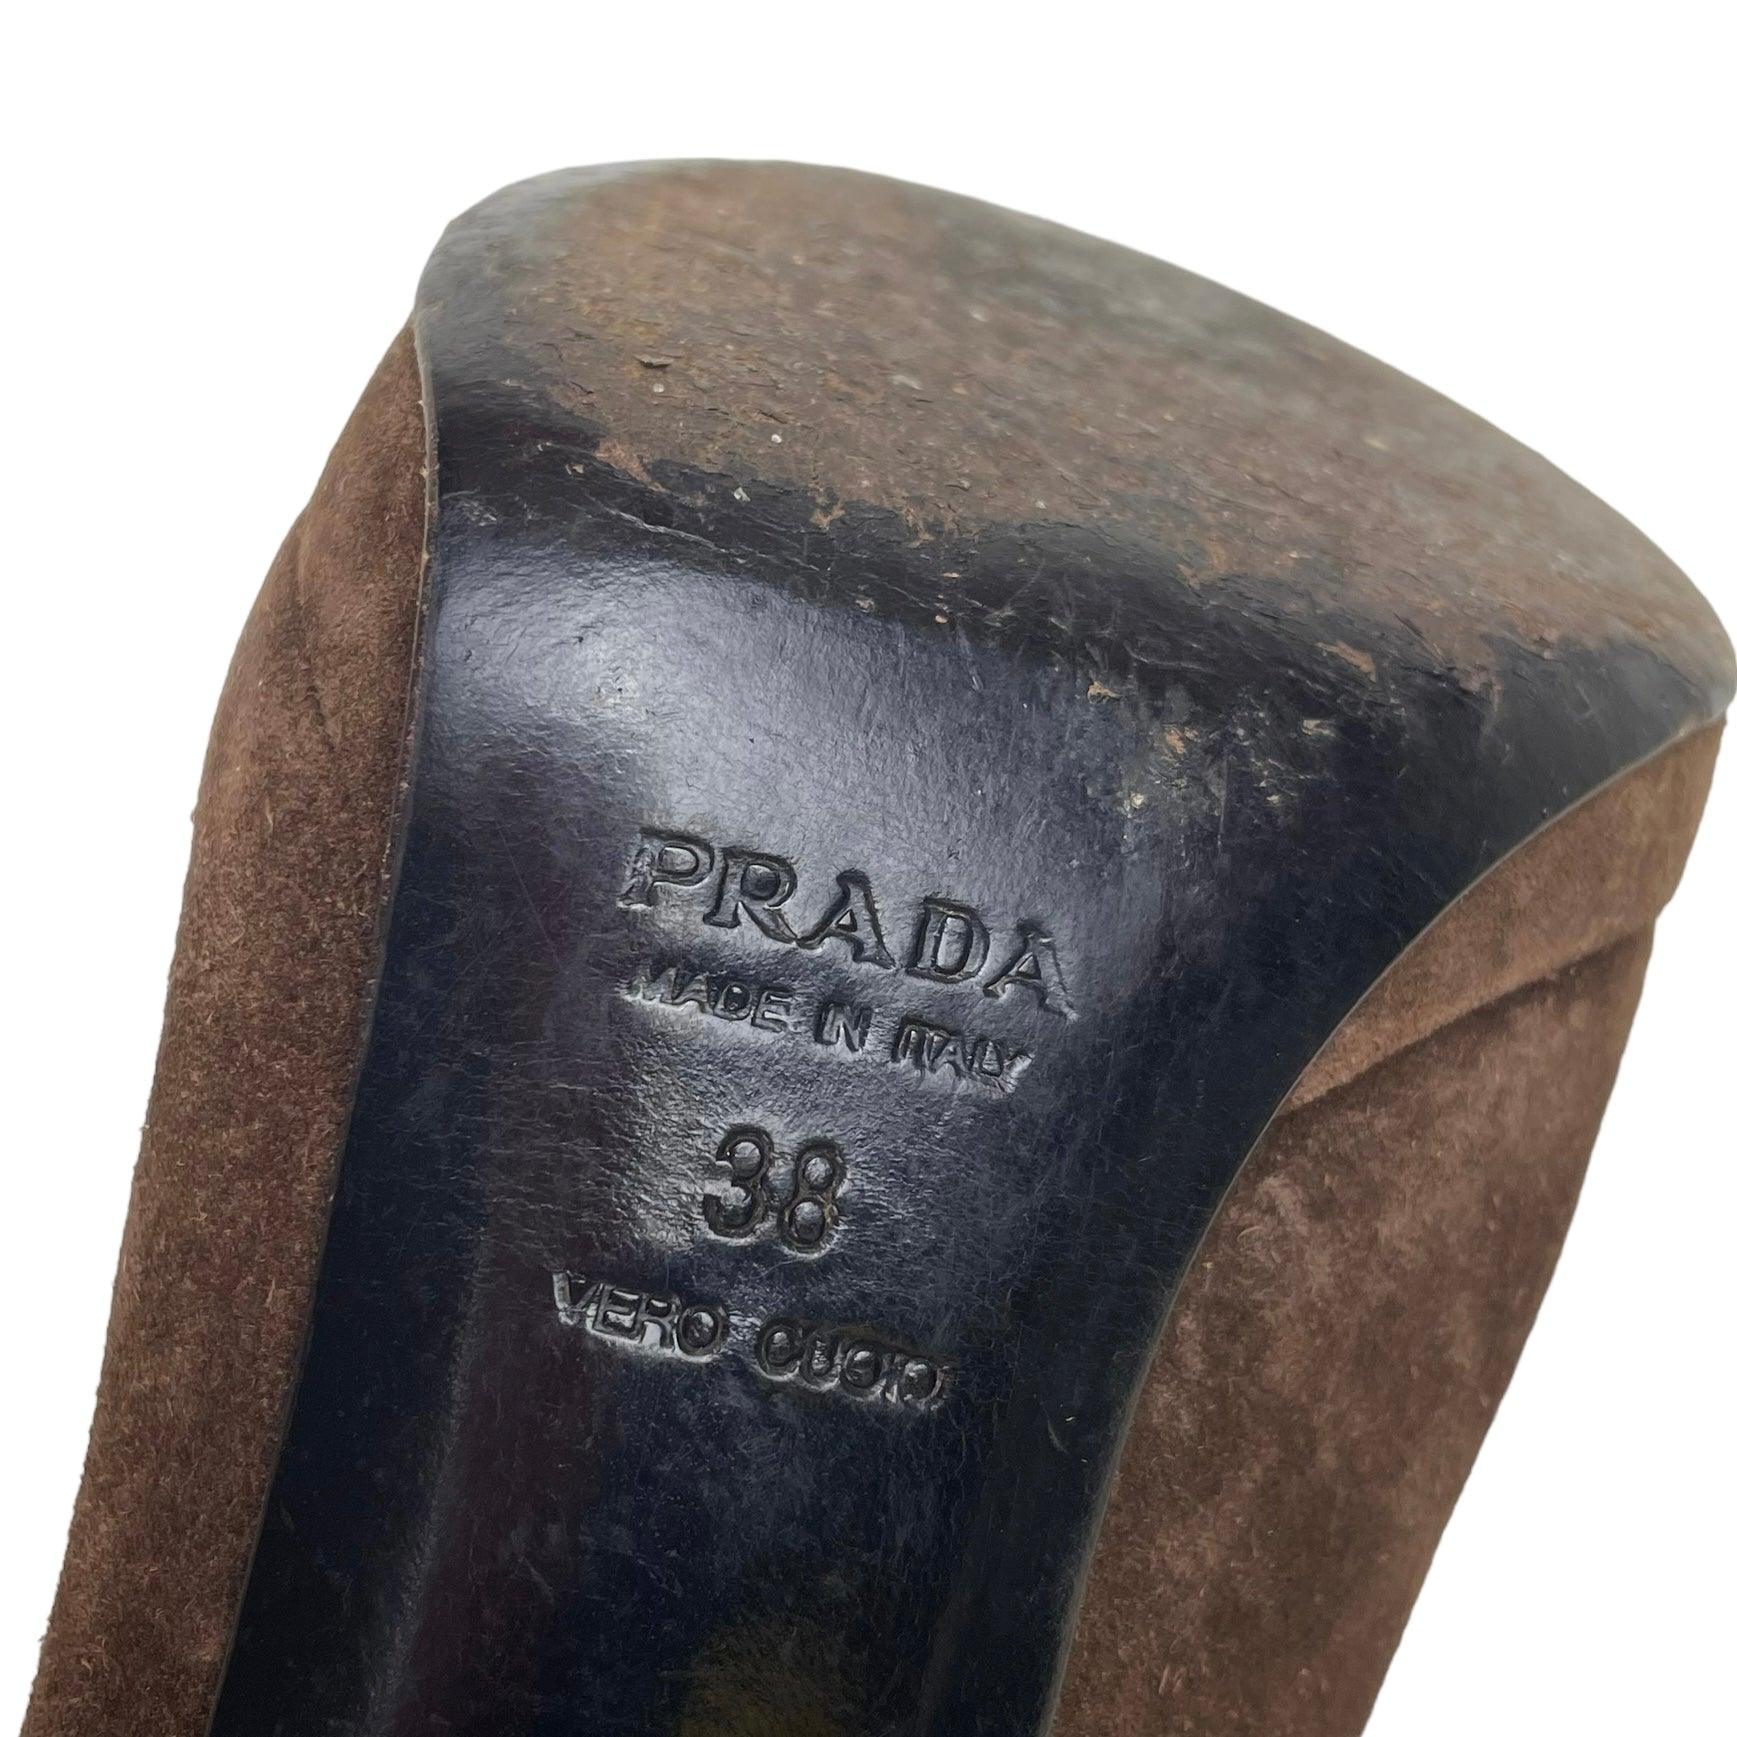 Prada F/W 2005 boots - Known Source